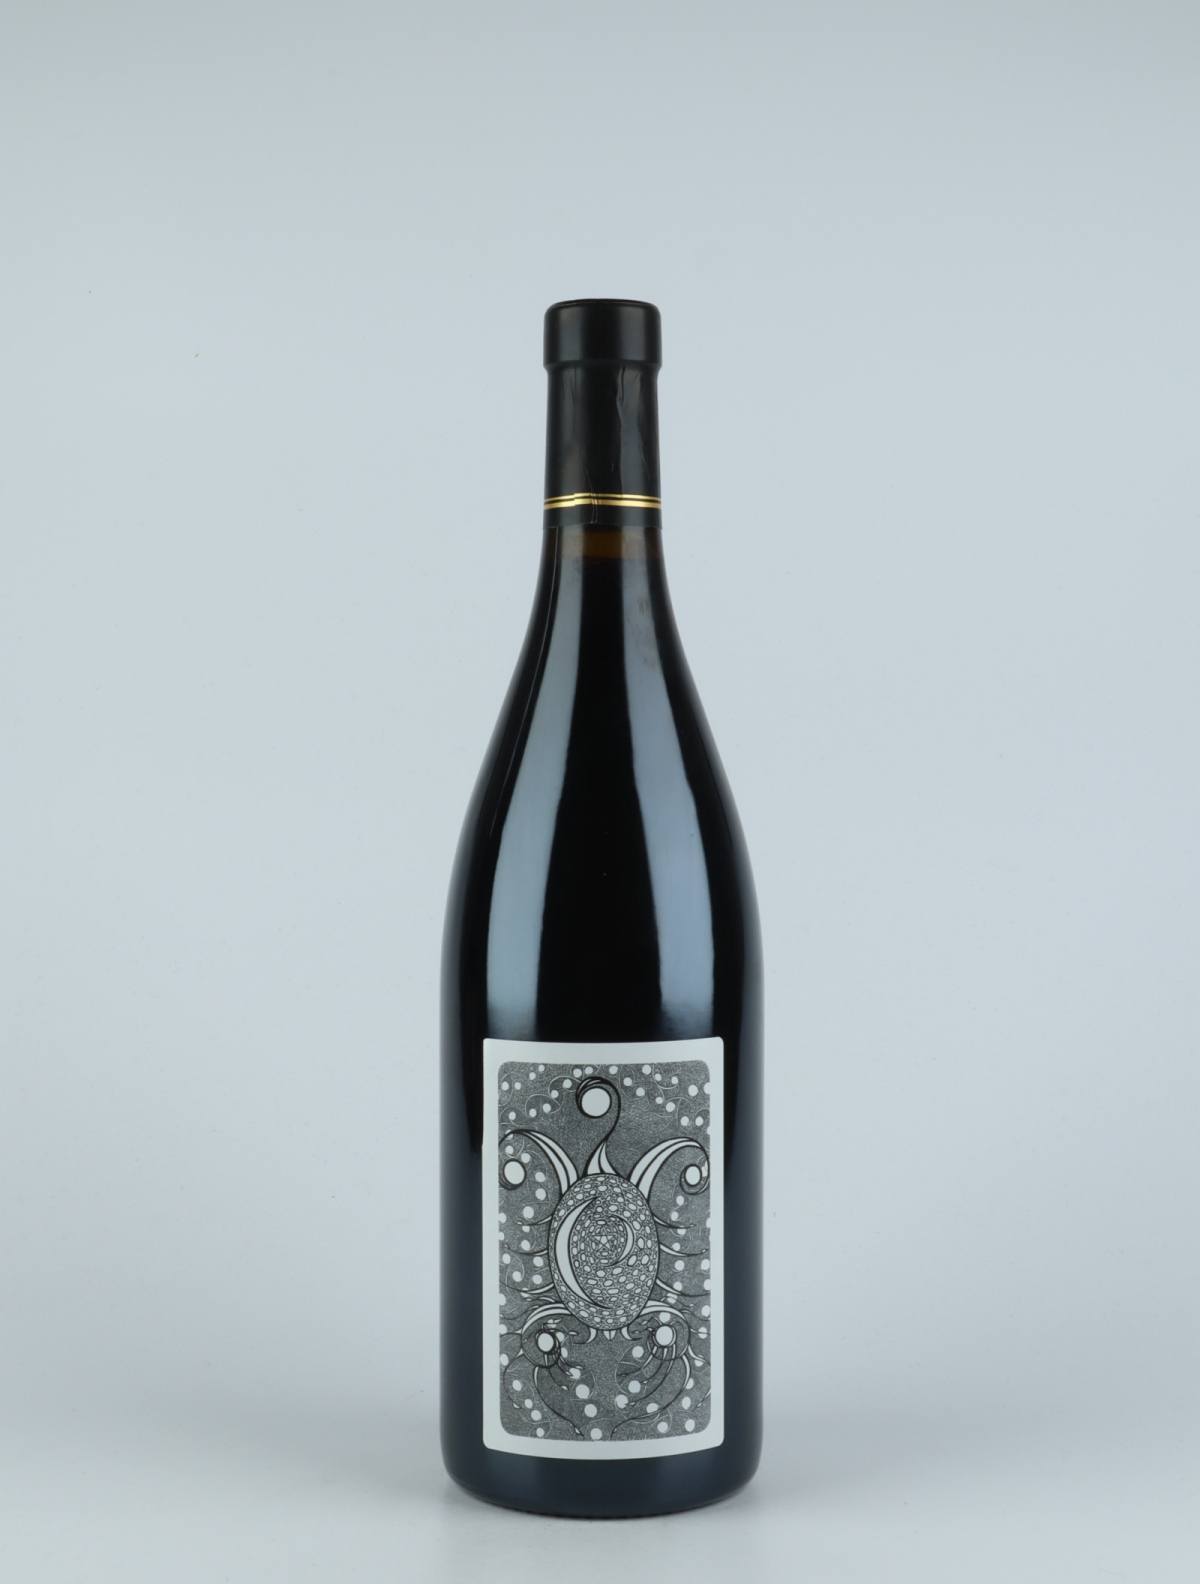 A bottle 2018 Elements Red wine from Julien Courtois, Loire in France